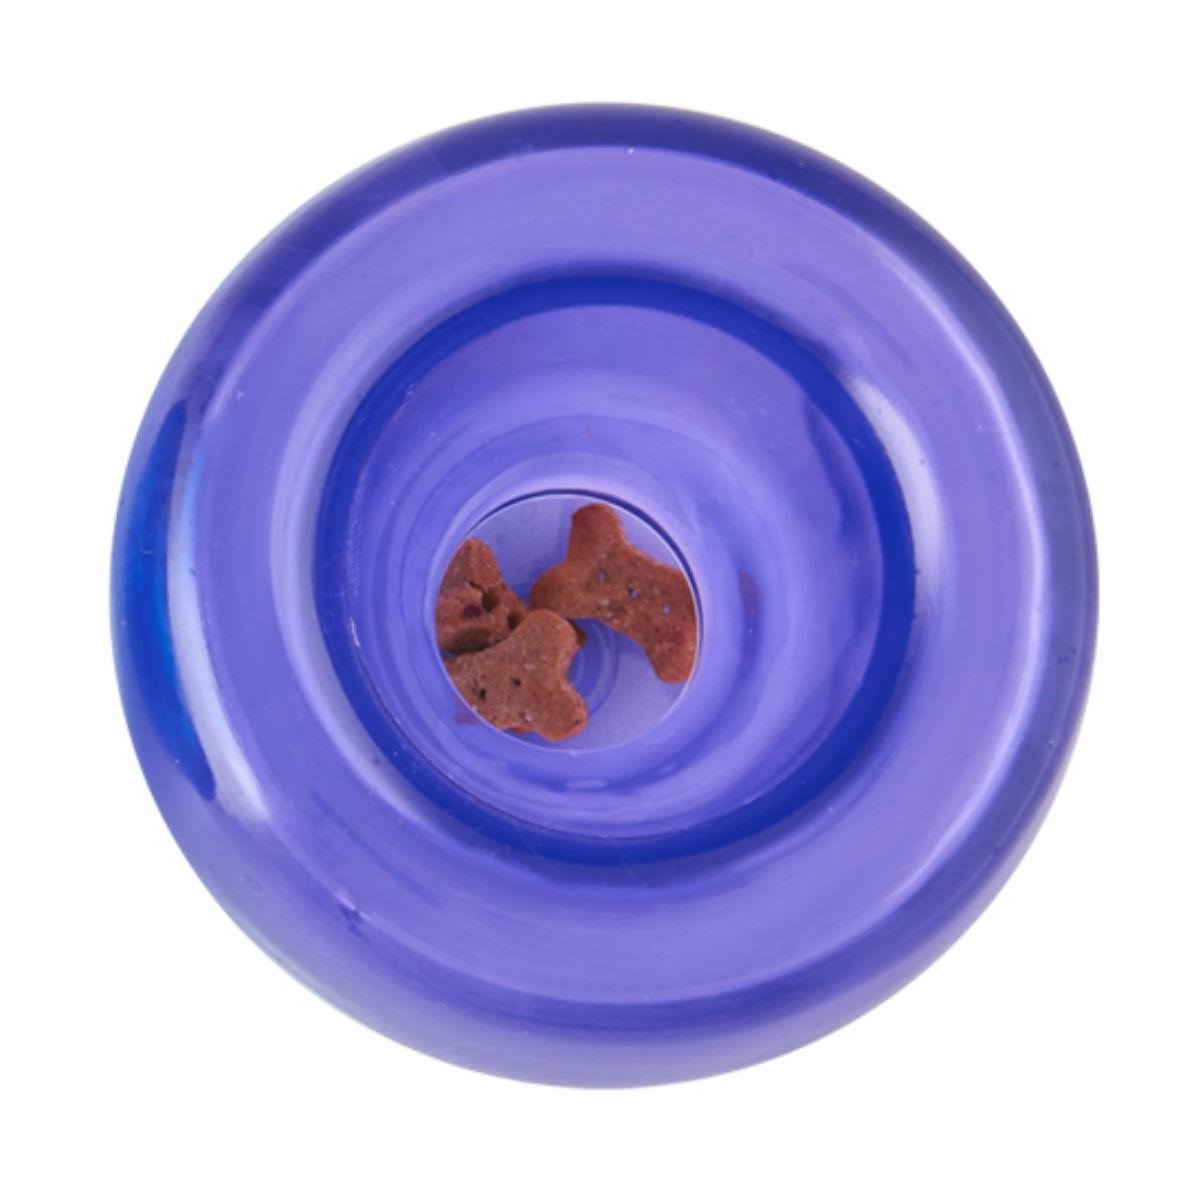 Planet Dog Orbee-Tuff Lil Snoop Dog Toy, Purple, Small